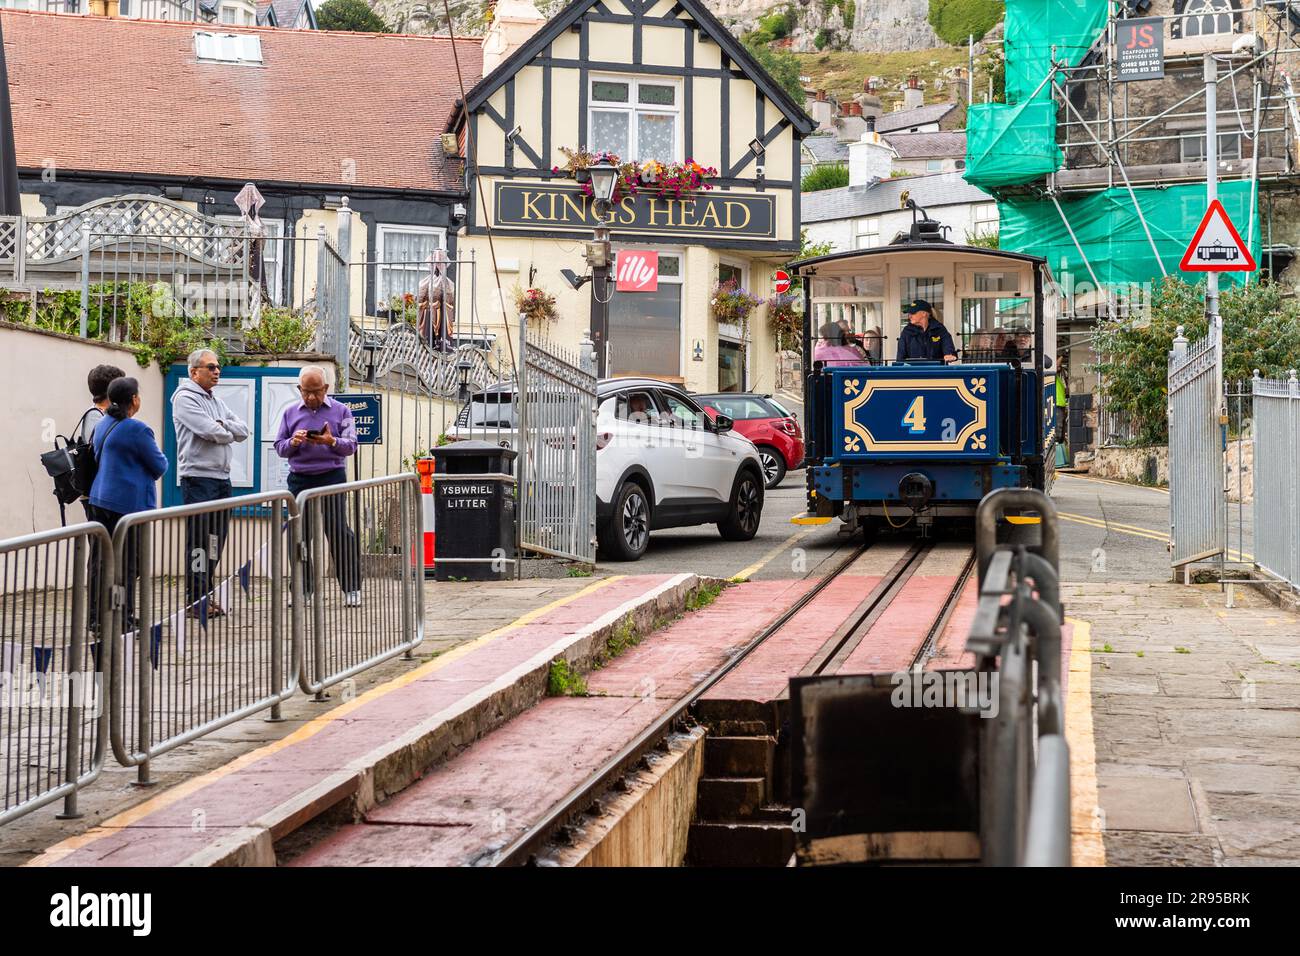 Great Orme tram No.4 passes the Kings Head pub as it approaches Llandudno Tram Station, Llandudno, North Wales, UK. Stock Photo